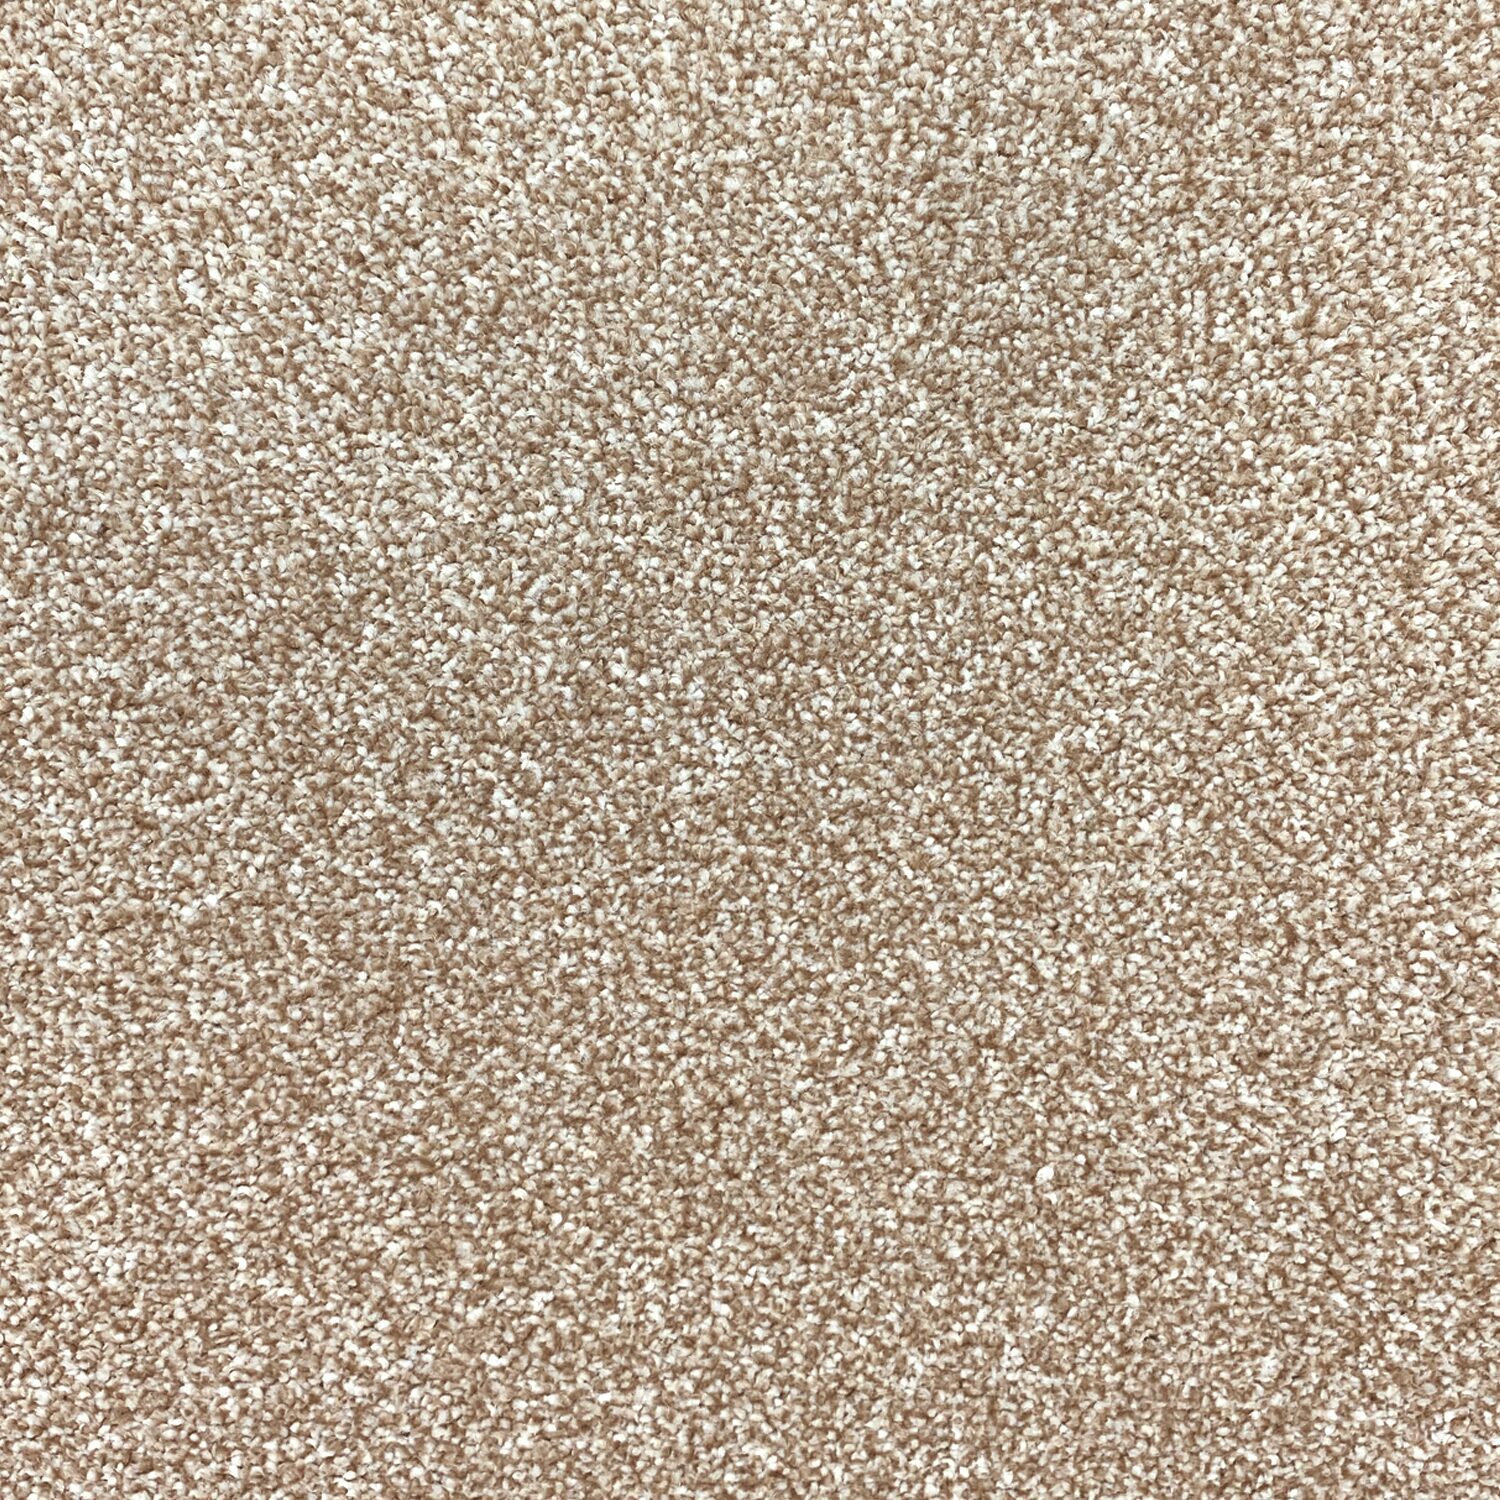 Carpet name: Smart Textures Modern Beige